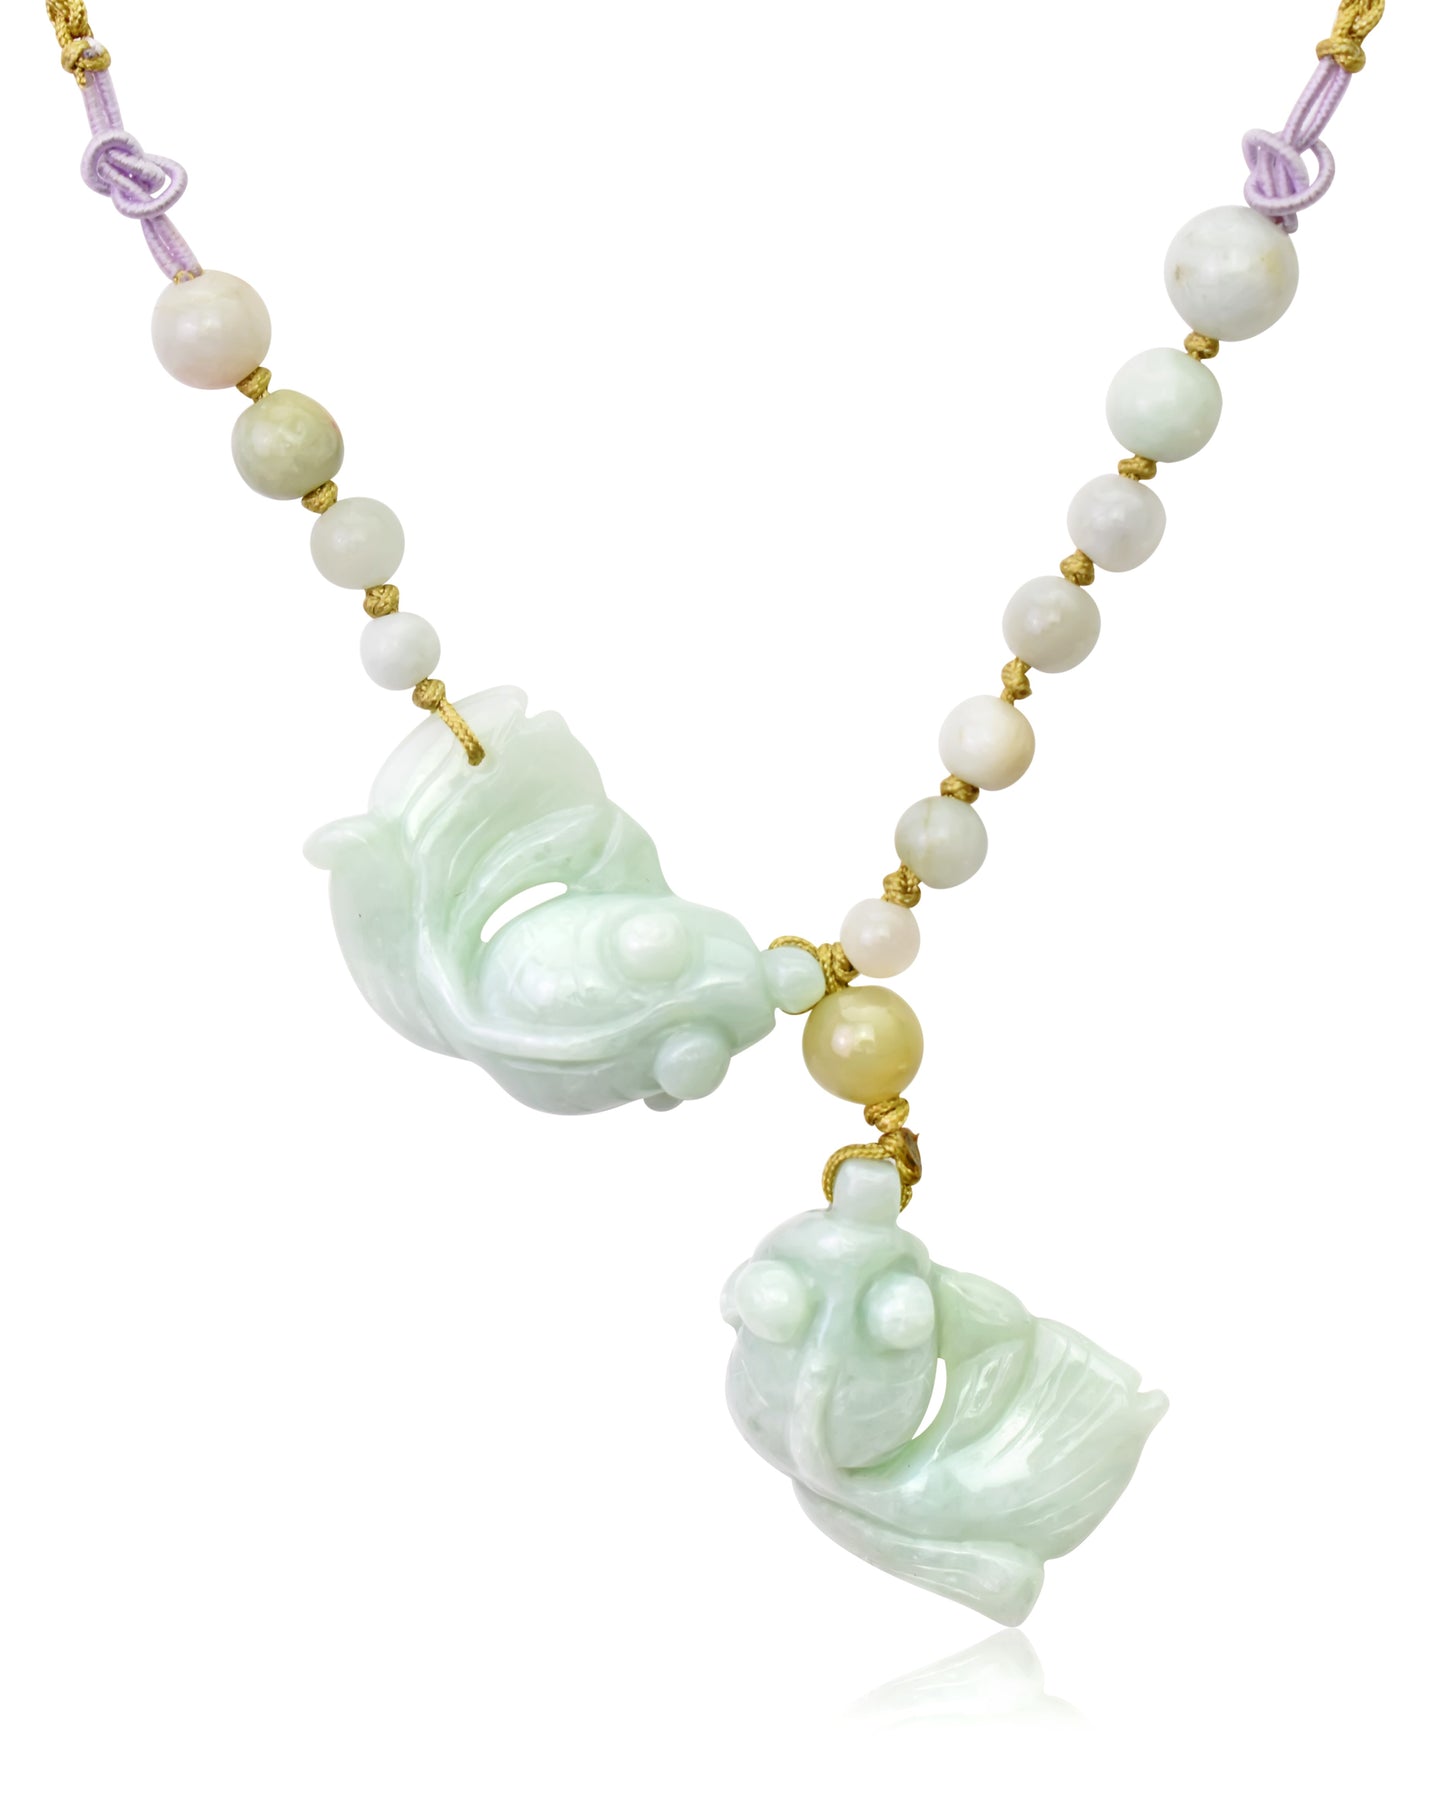 Double Gold Fish Handmade Jade Necklace Pendant